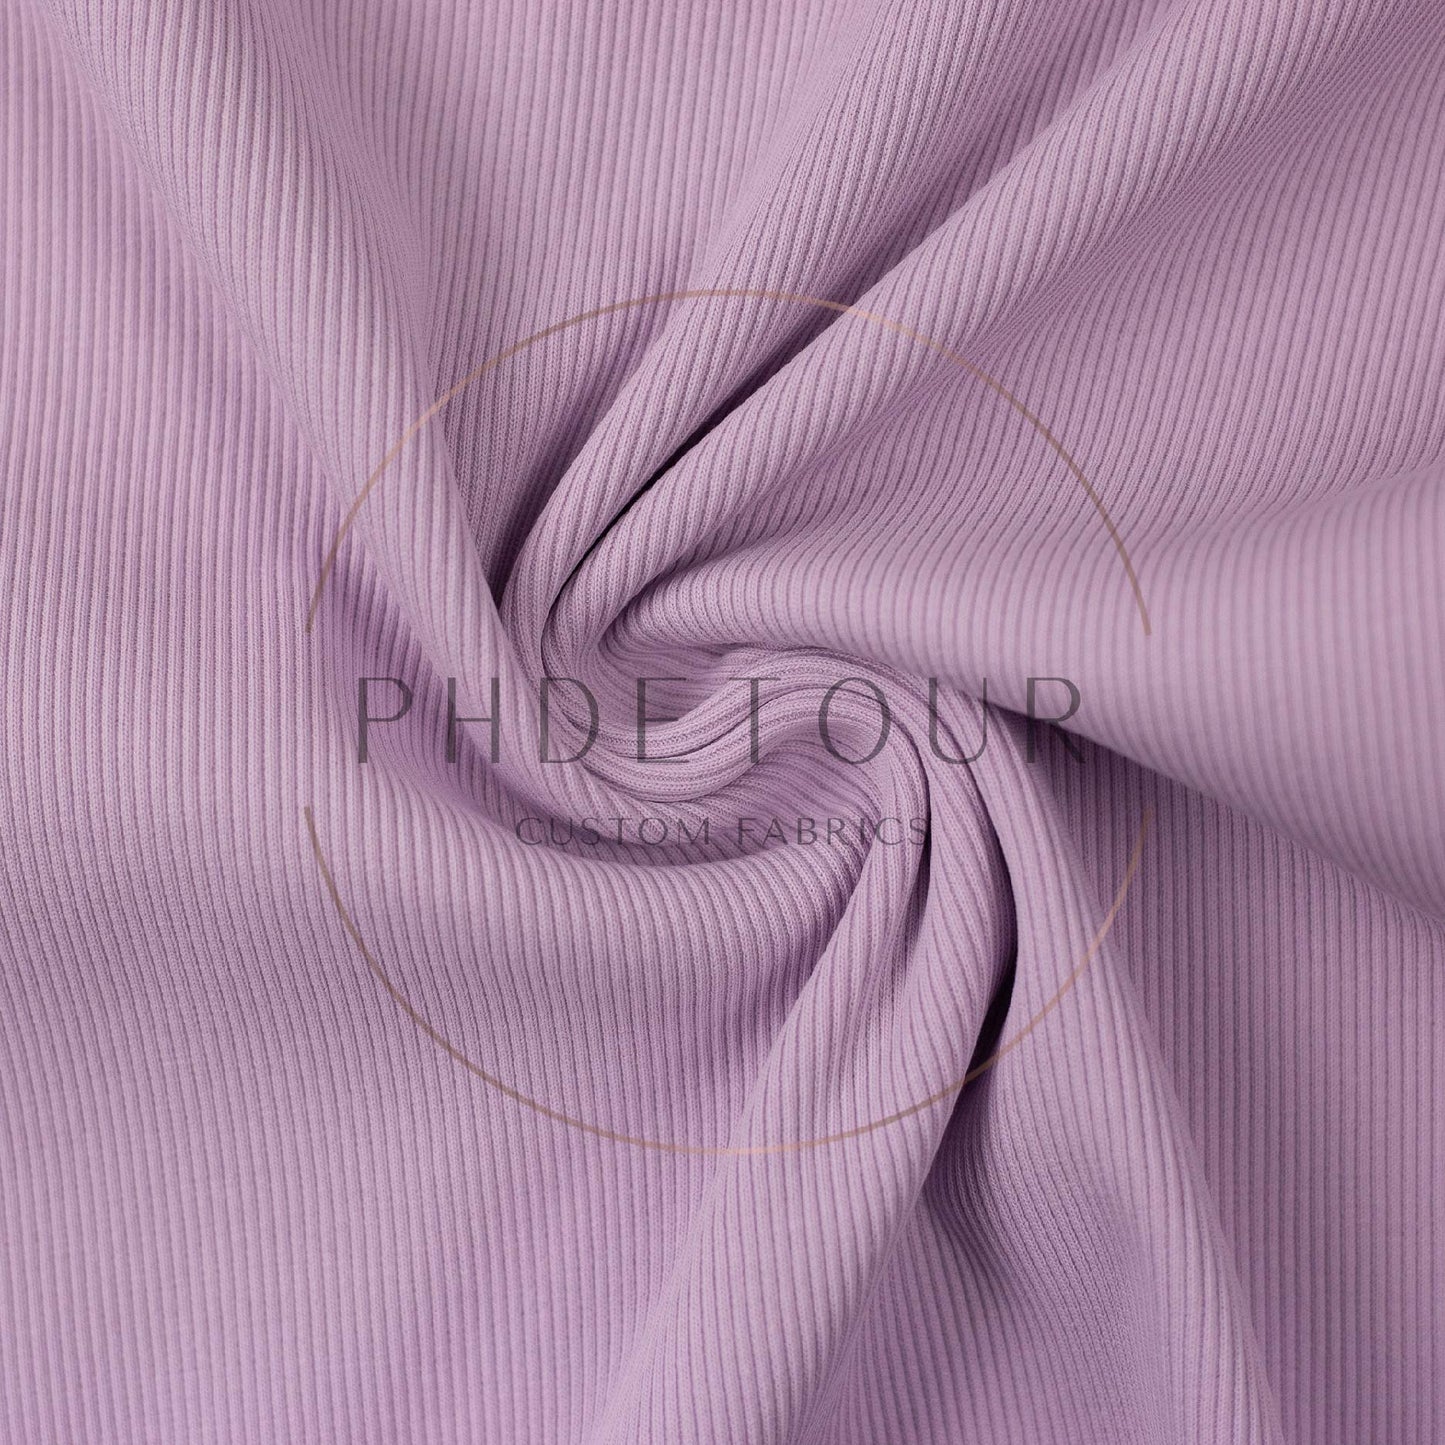 European Ribbed Jersey - 641 - Pale Lavender